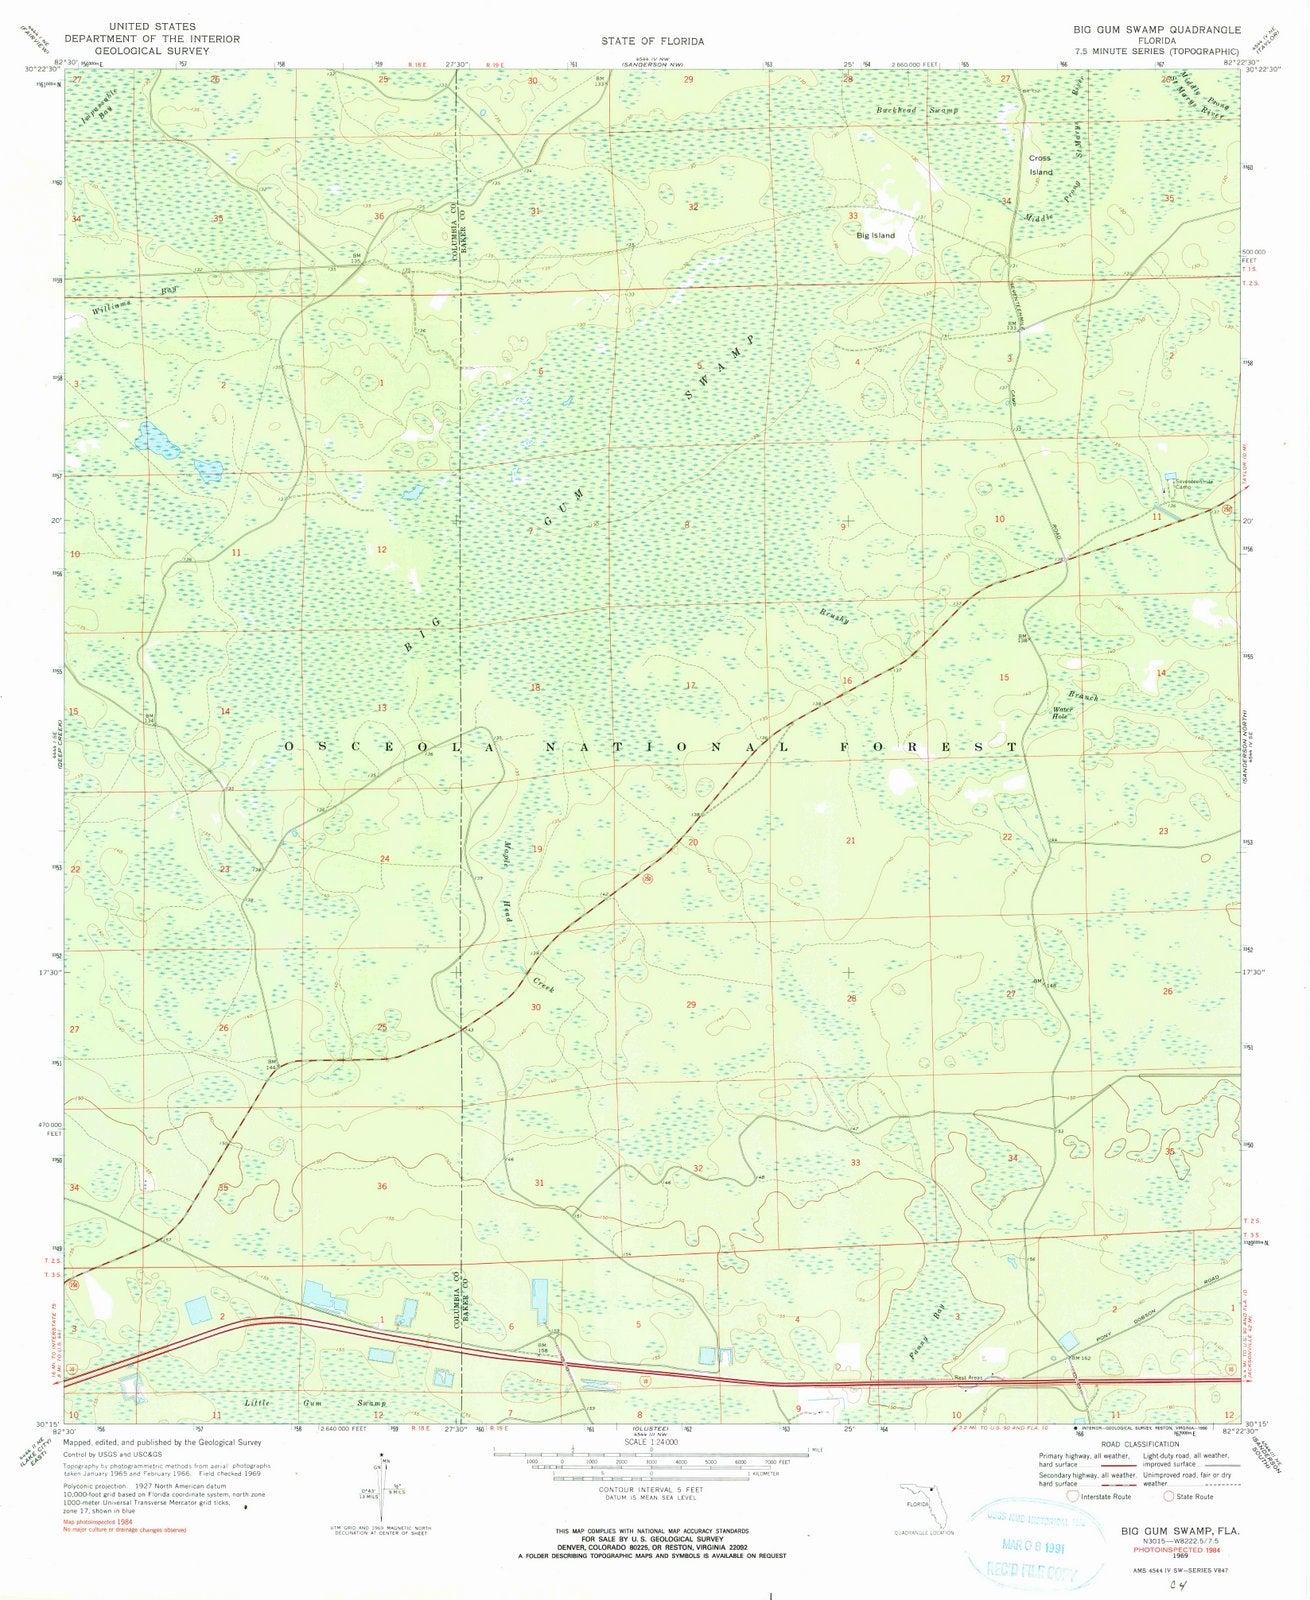 1969 Big Gumamp, FL - Florida - USGS Topographic Map